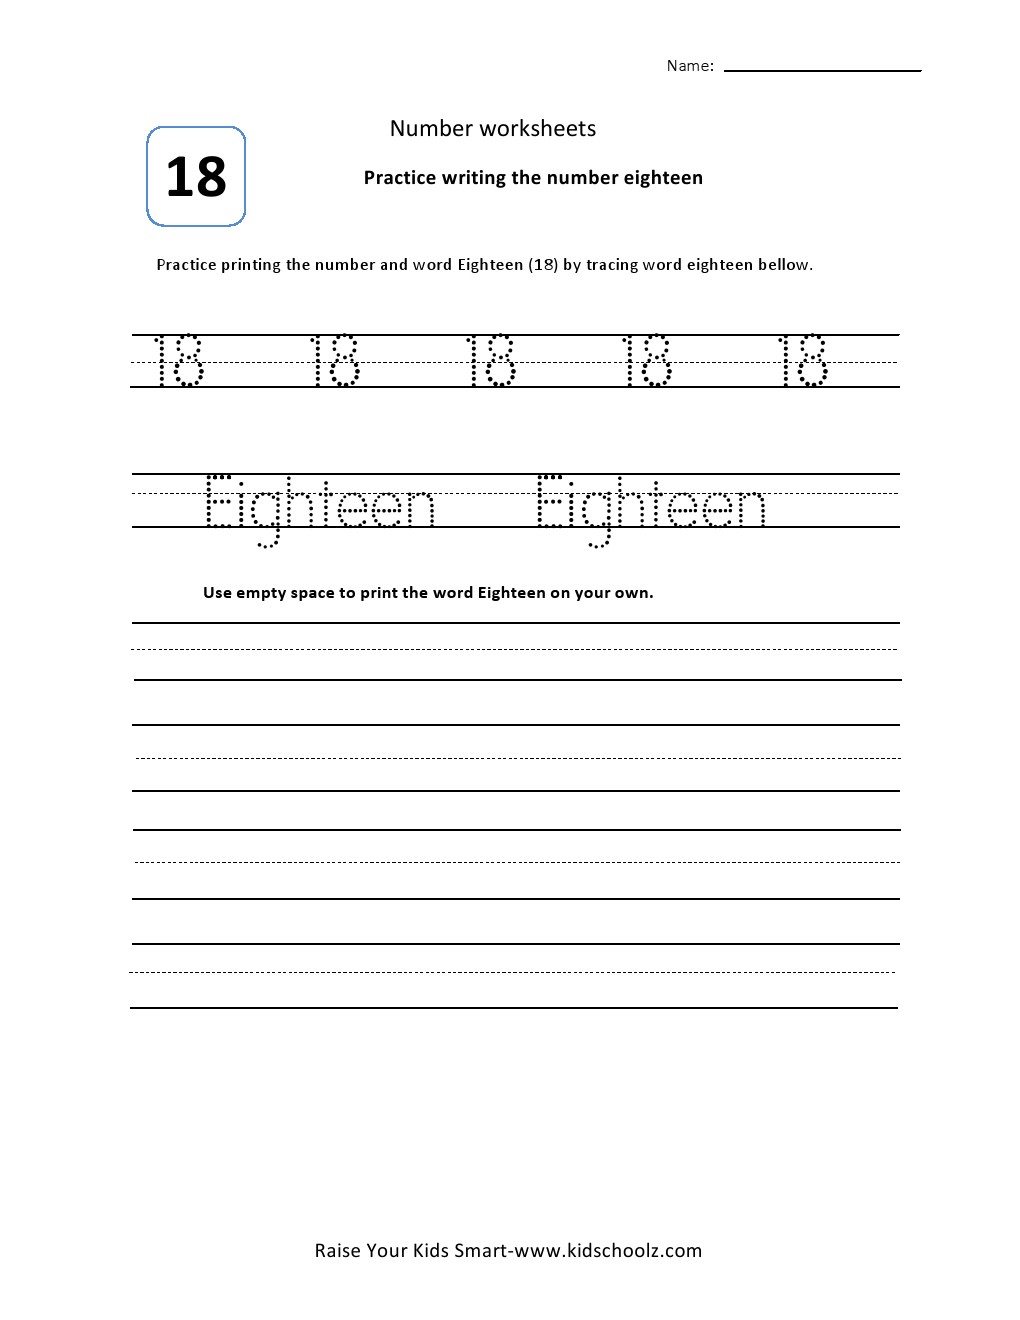 12 Best Images Of Number 18 Worksheets Preschool Worksheets Number 14 Number 18 Worksheets